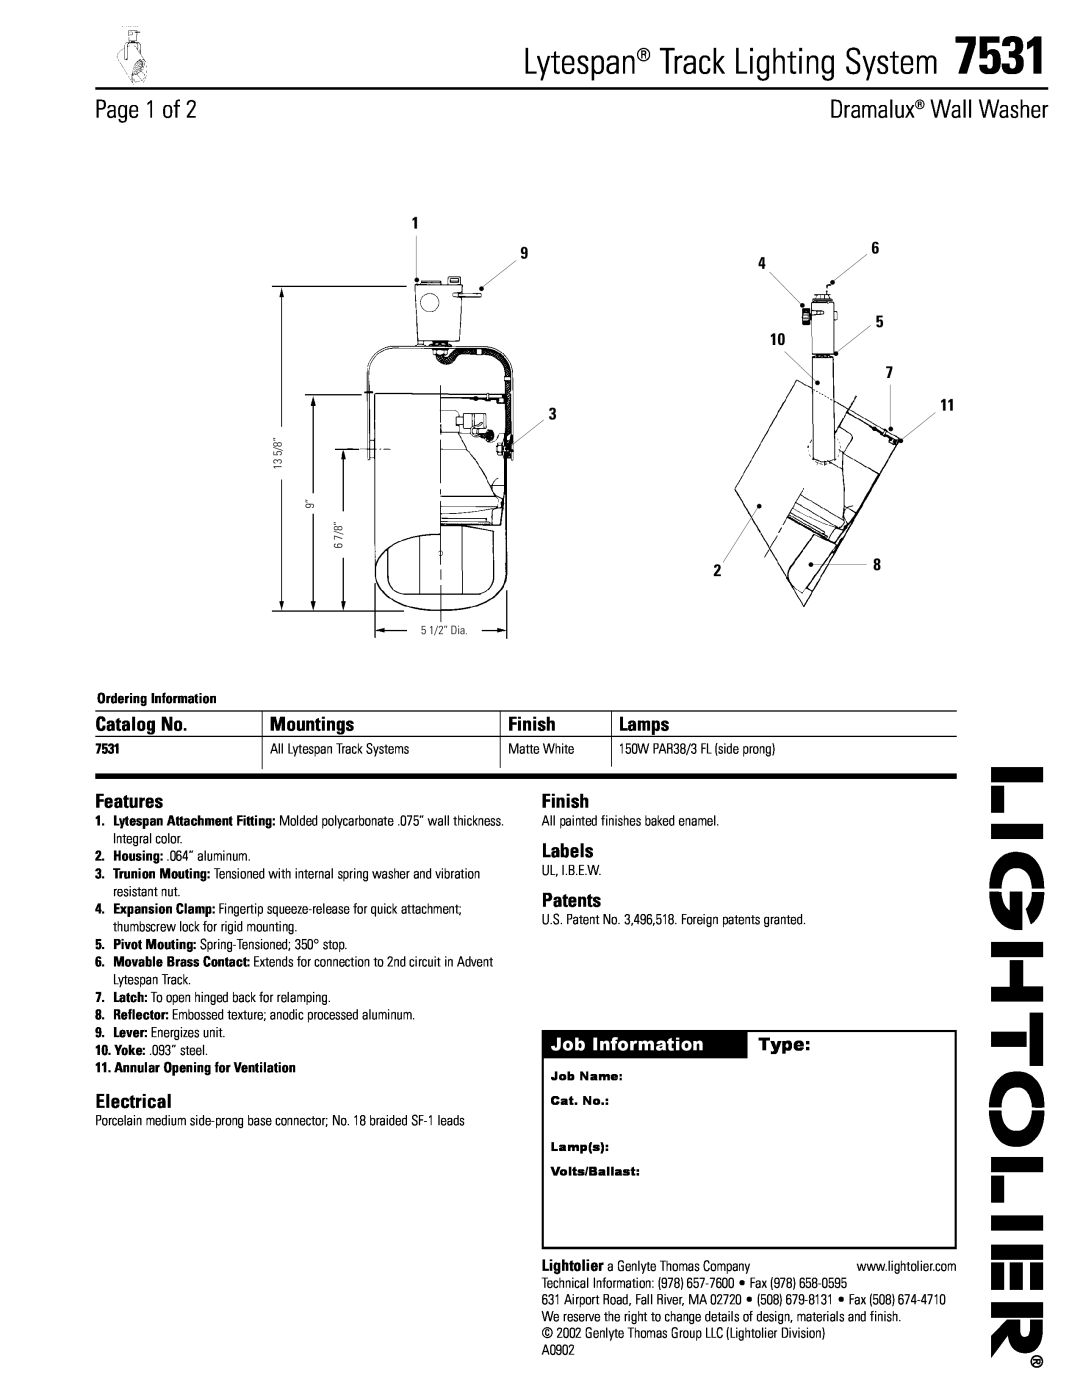 Lightolier 7531 manual Page 1 of, Job Information, Type, Lytespan Track Lighting System, Dramalux Wall Washer, Catalog No 